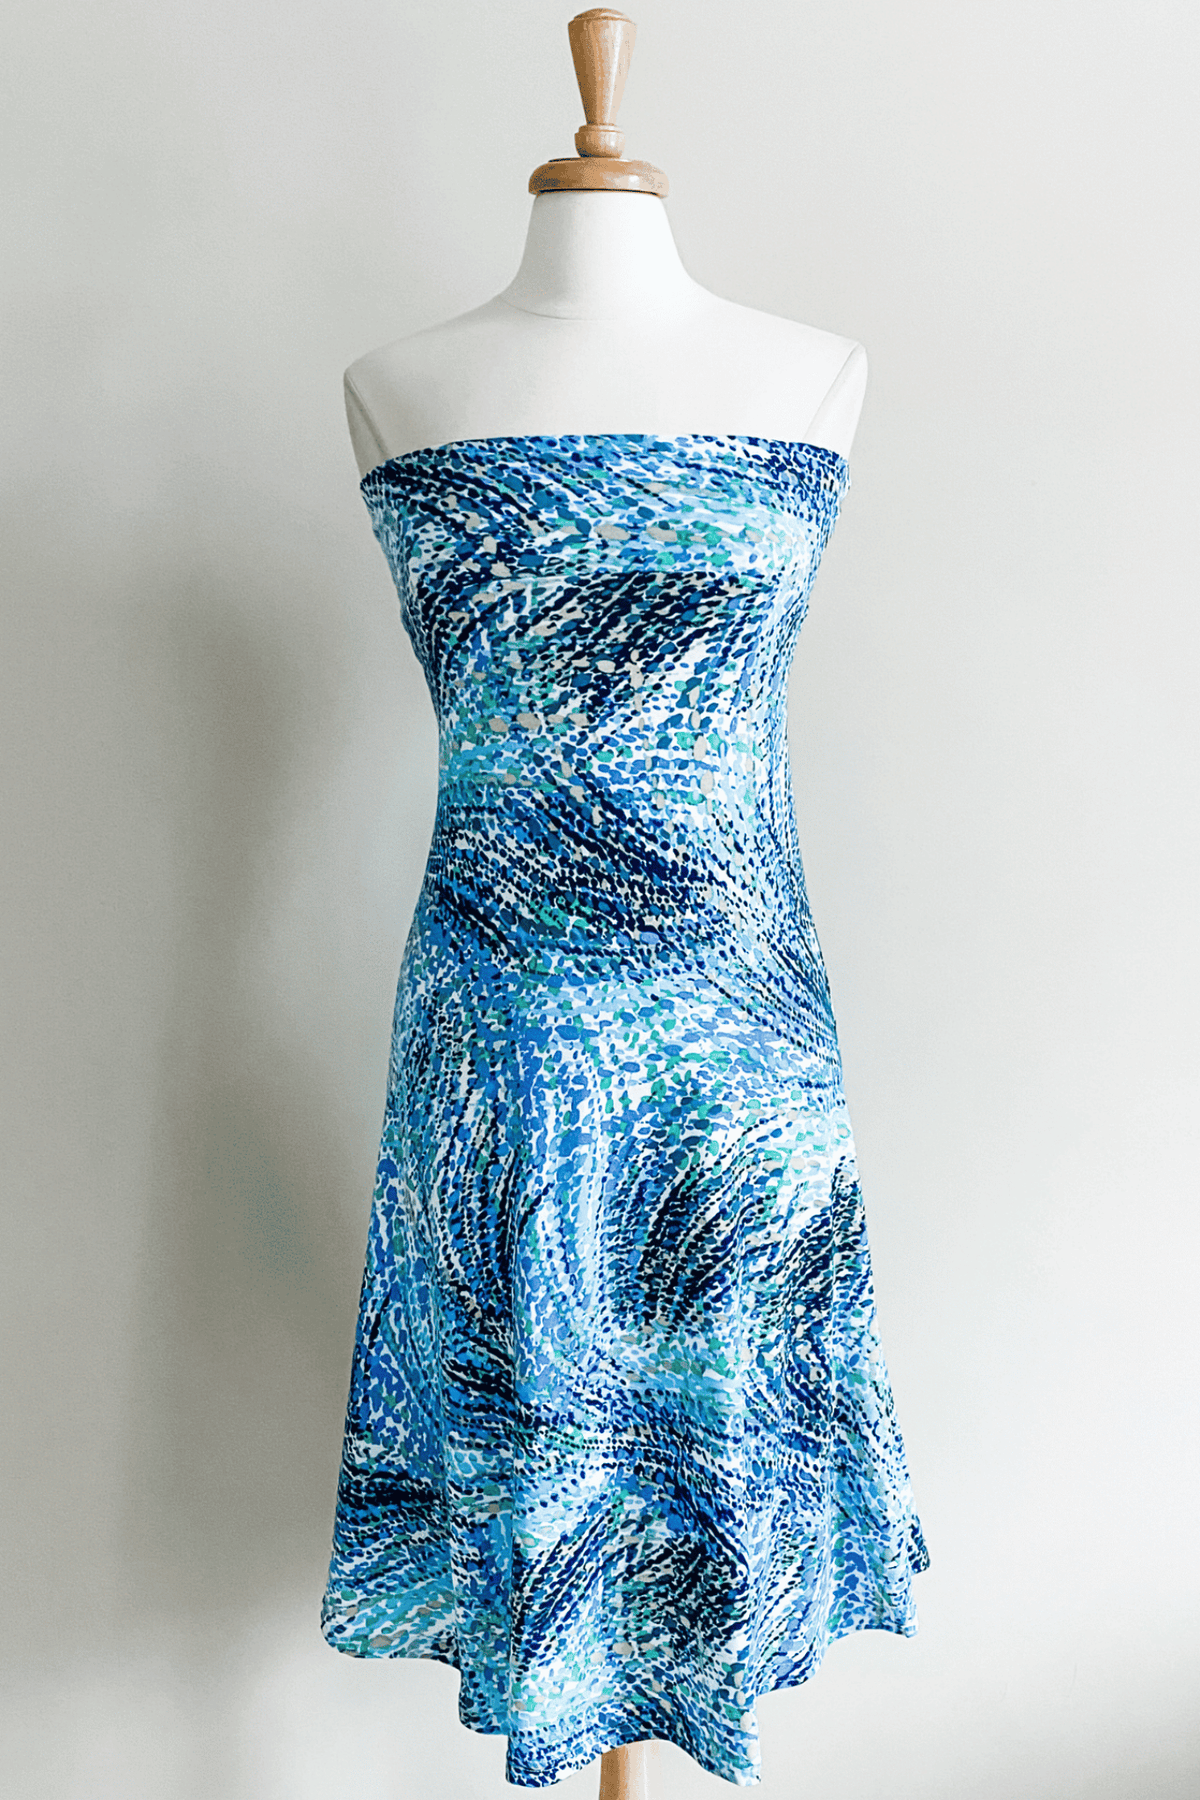 Diane Kroe Wear-Ever Dress in Prints (Whirlpool Turquoise Chartreuse) - Warm Weather Capsule 